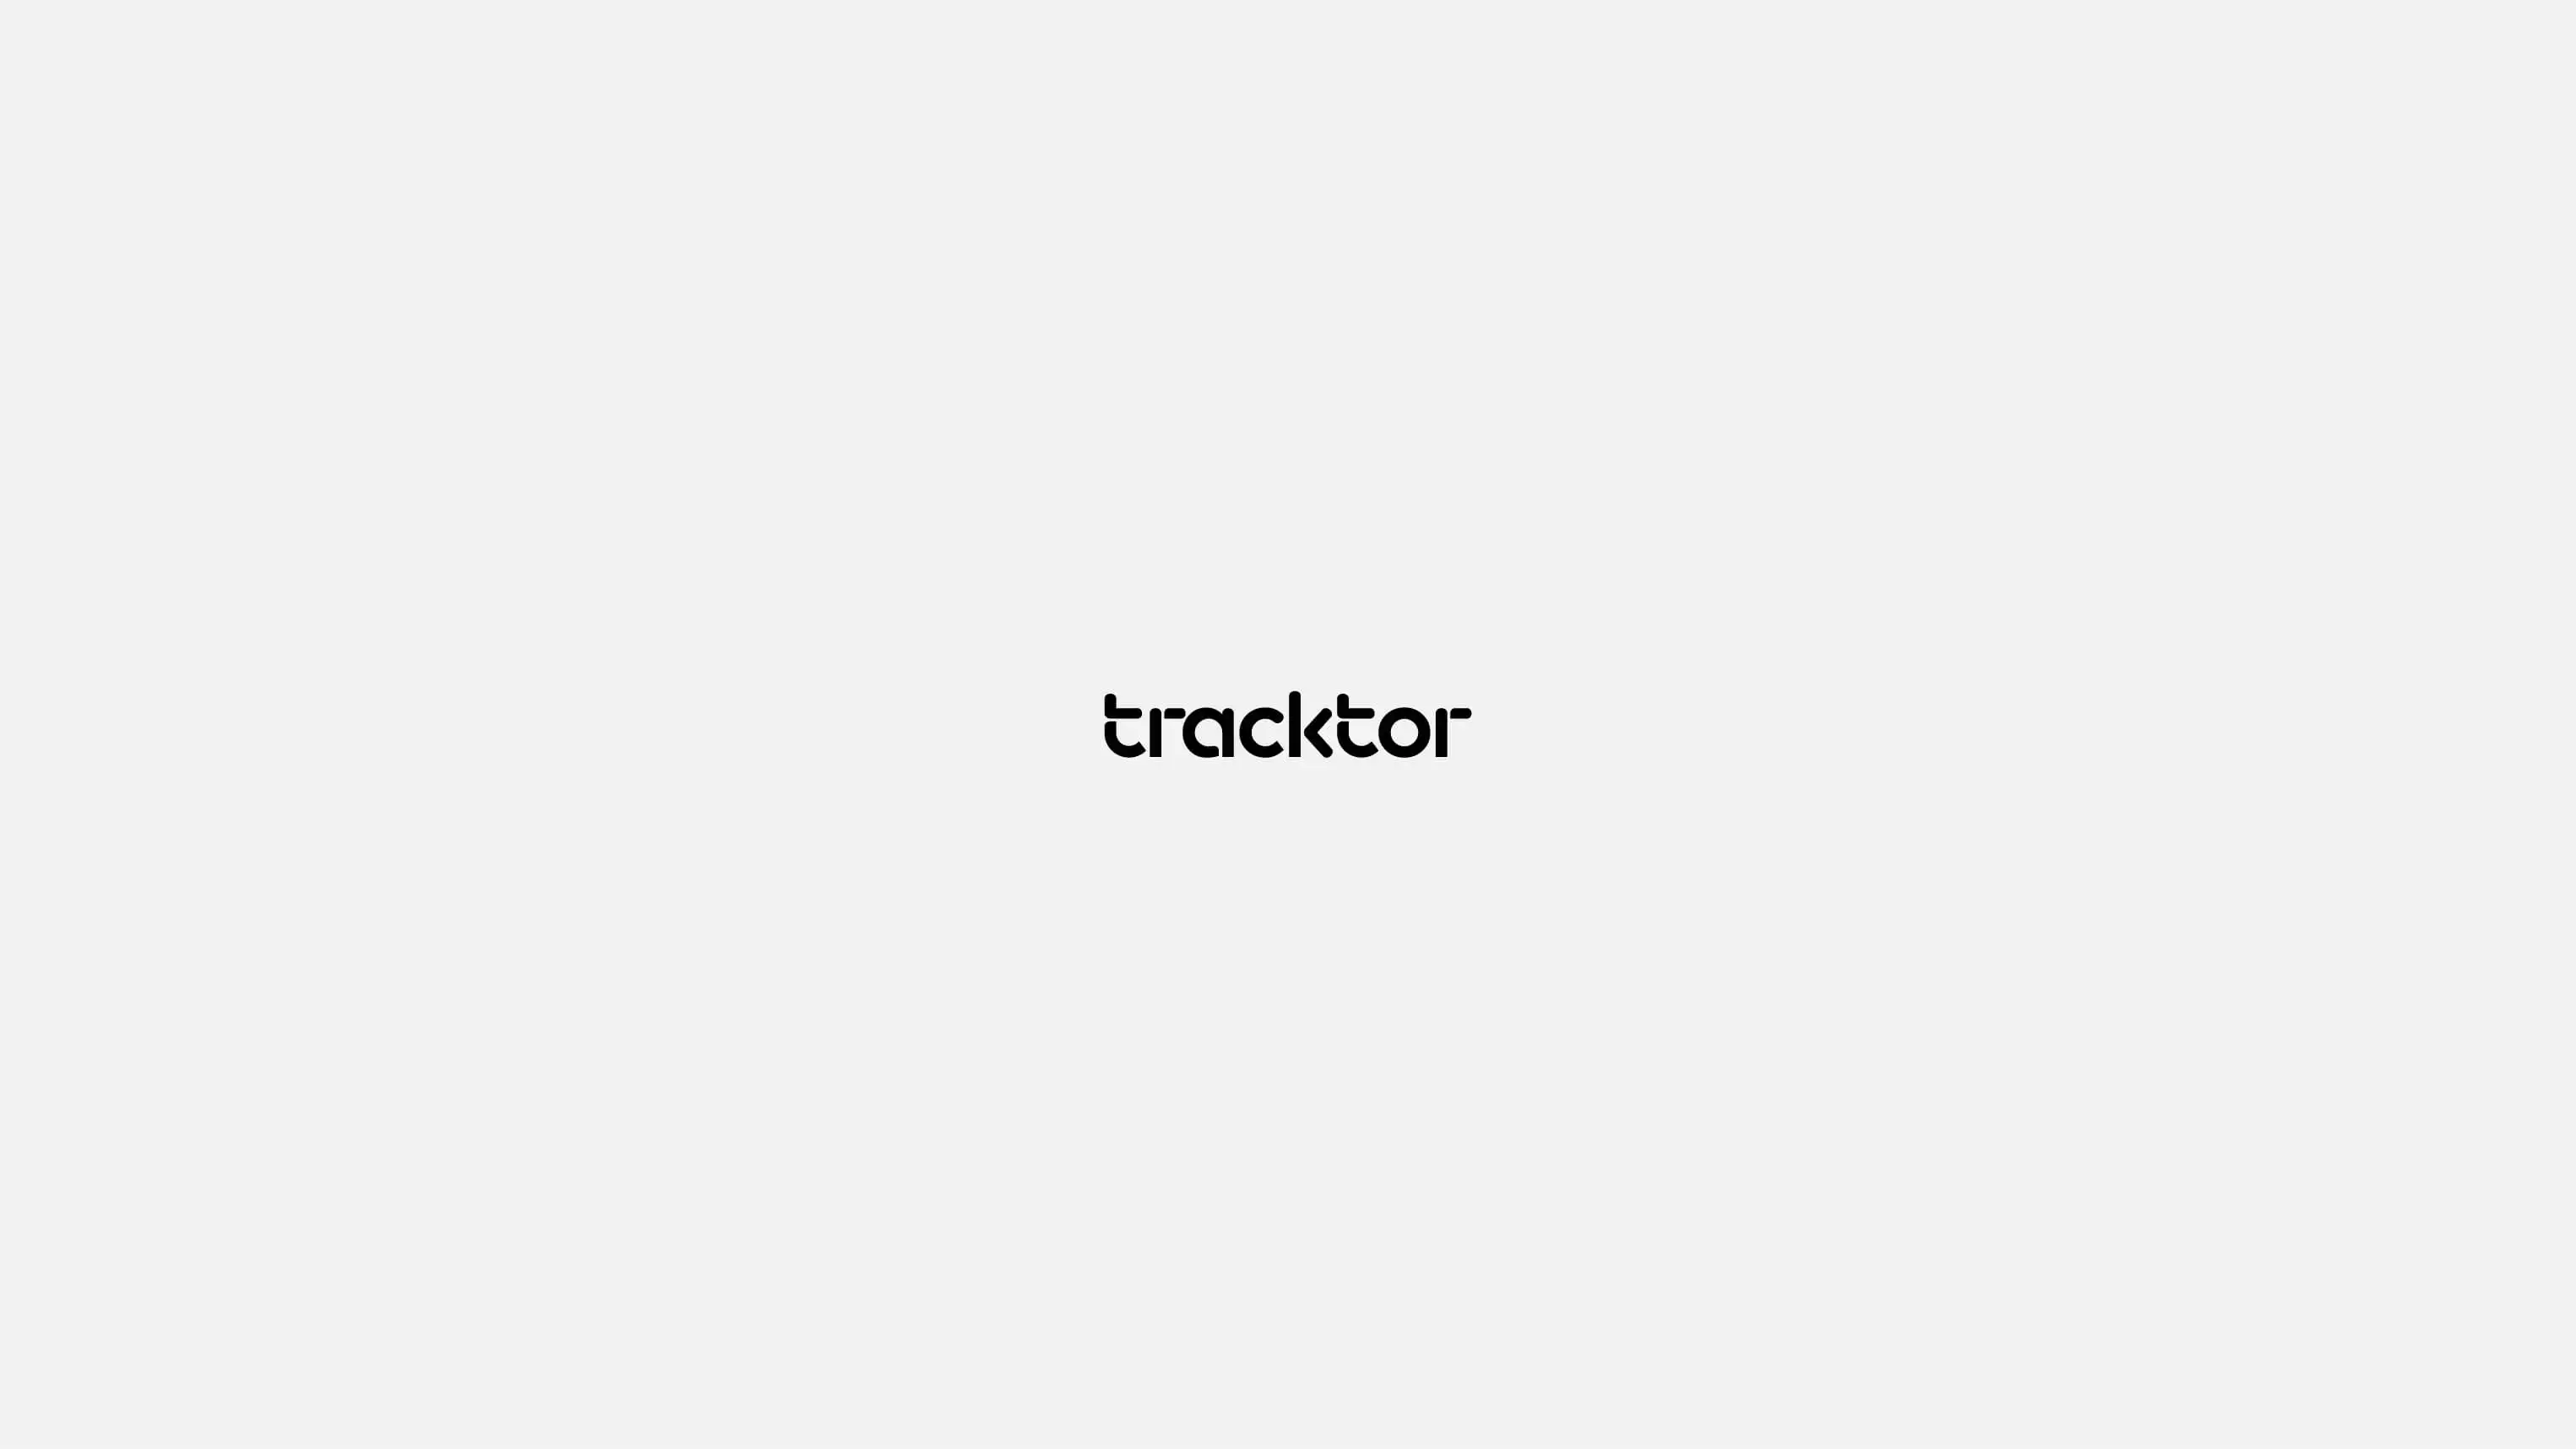 Tracktor's logotype